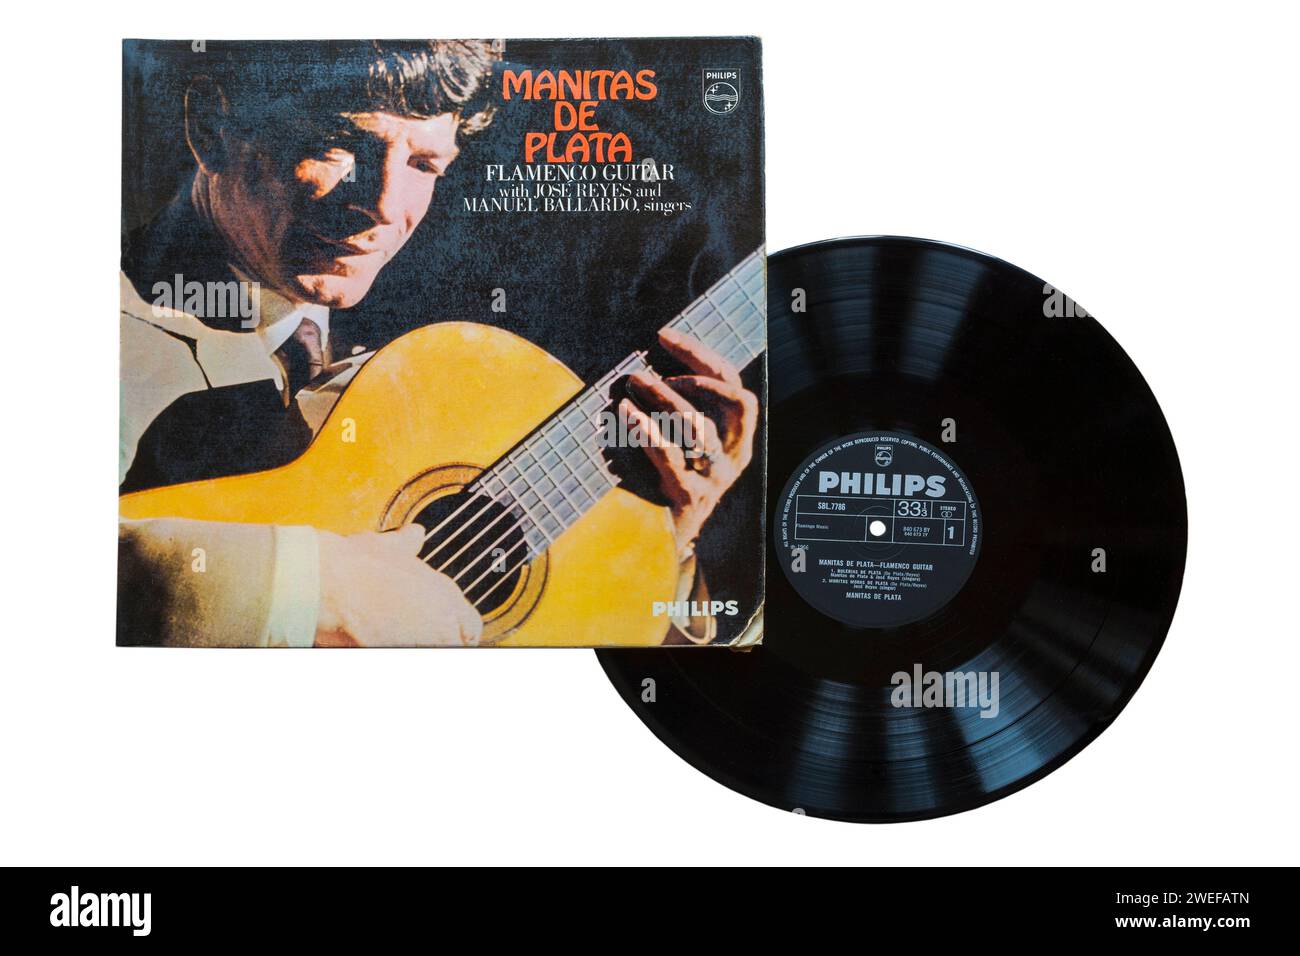 Manitas de Plata flamenco guitar with Jose Reyes and Manuel Ballardo singers vinyl record album LP cover isolated on white background -1966 Stock Photo